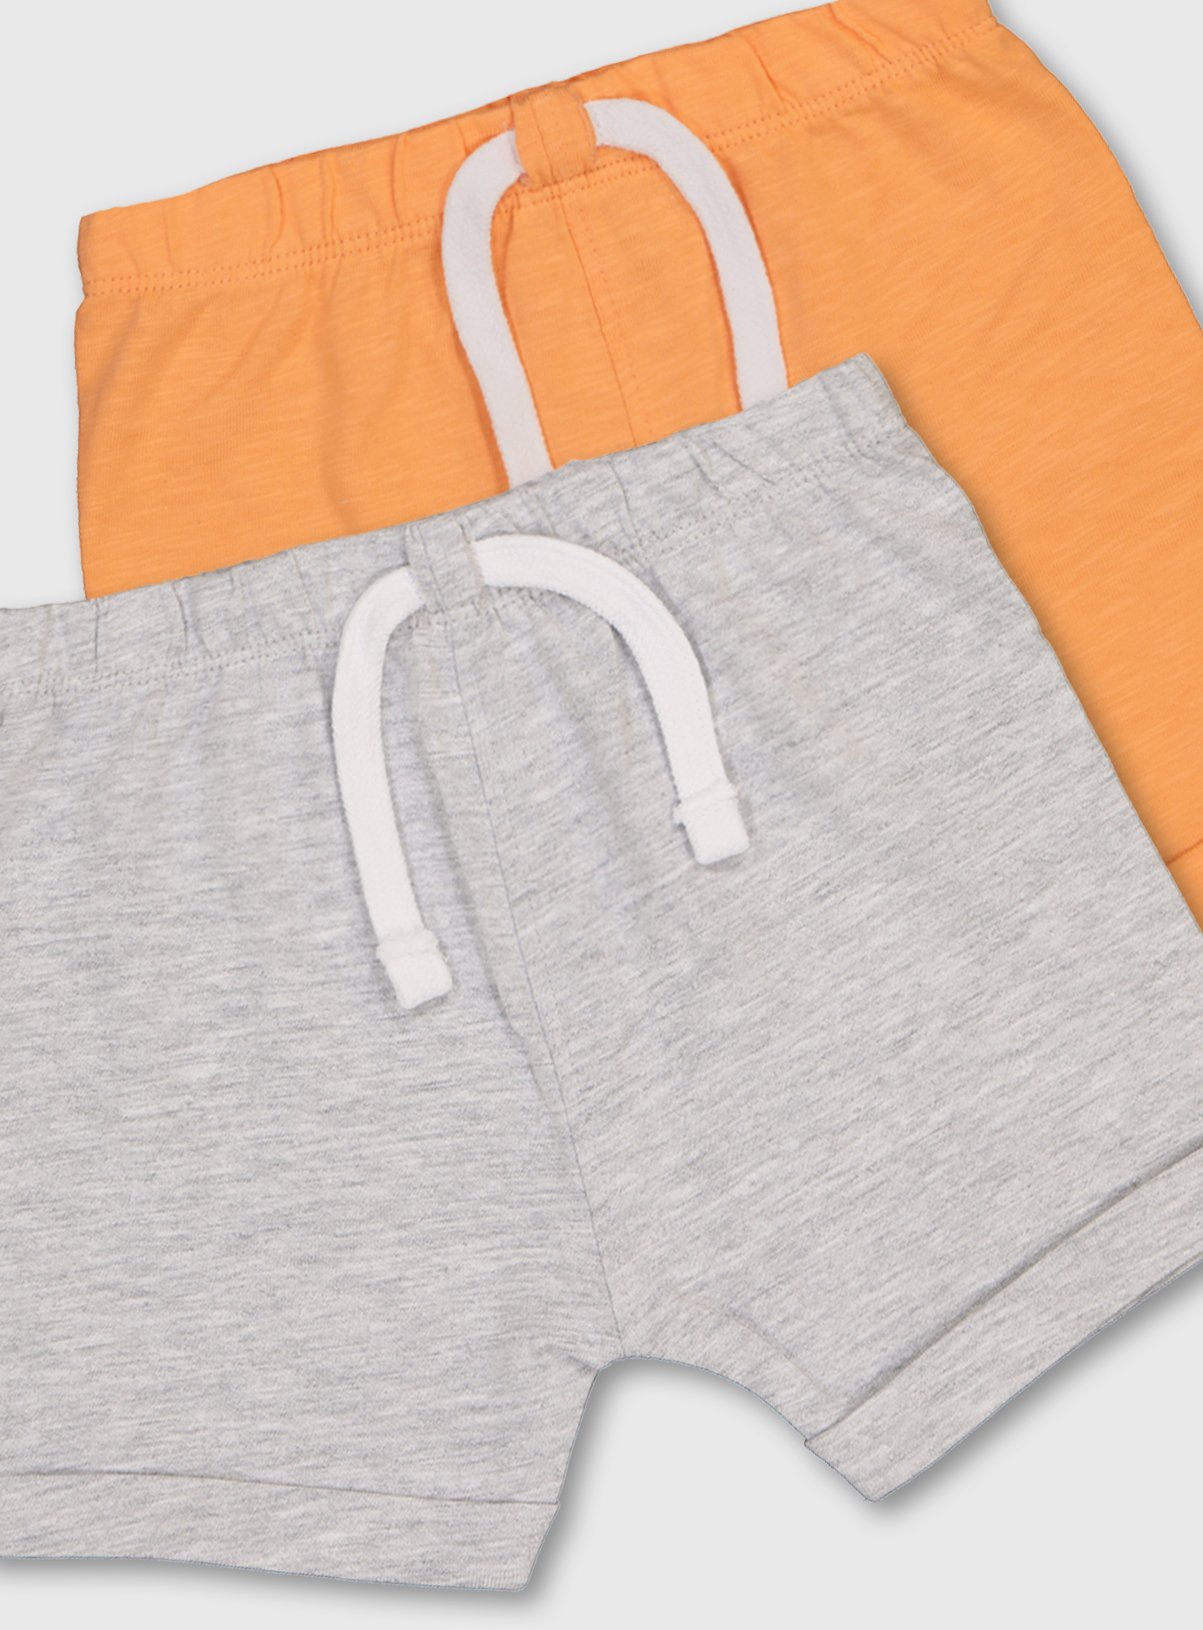 Grey & Orange Shorts 2 Pack Review